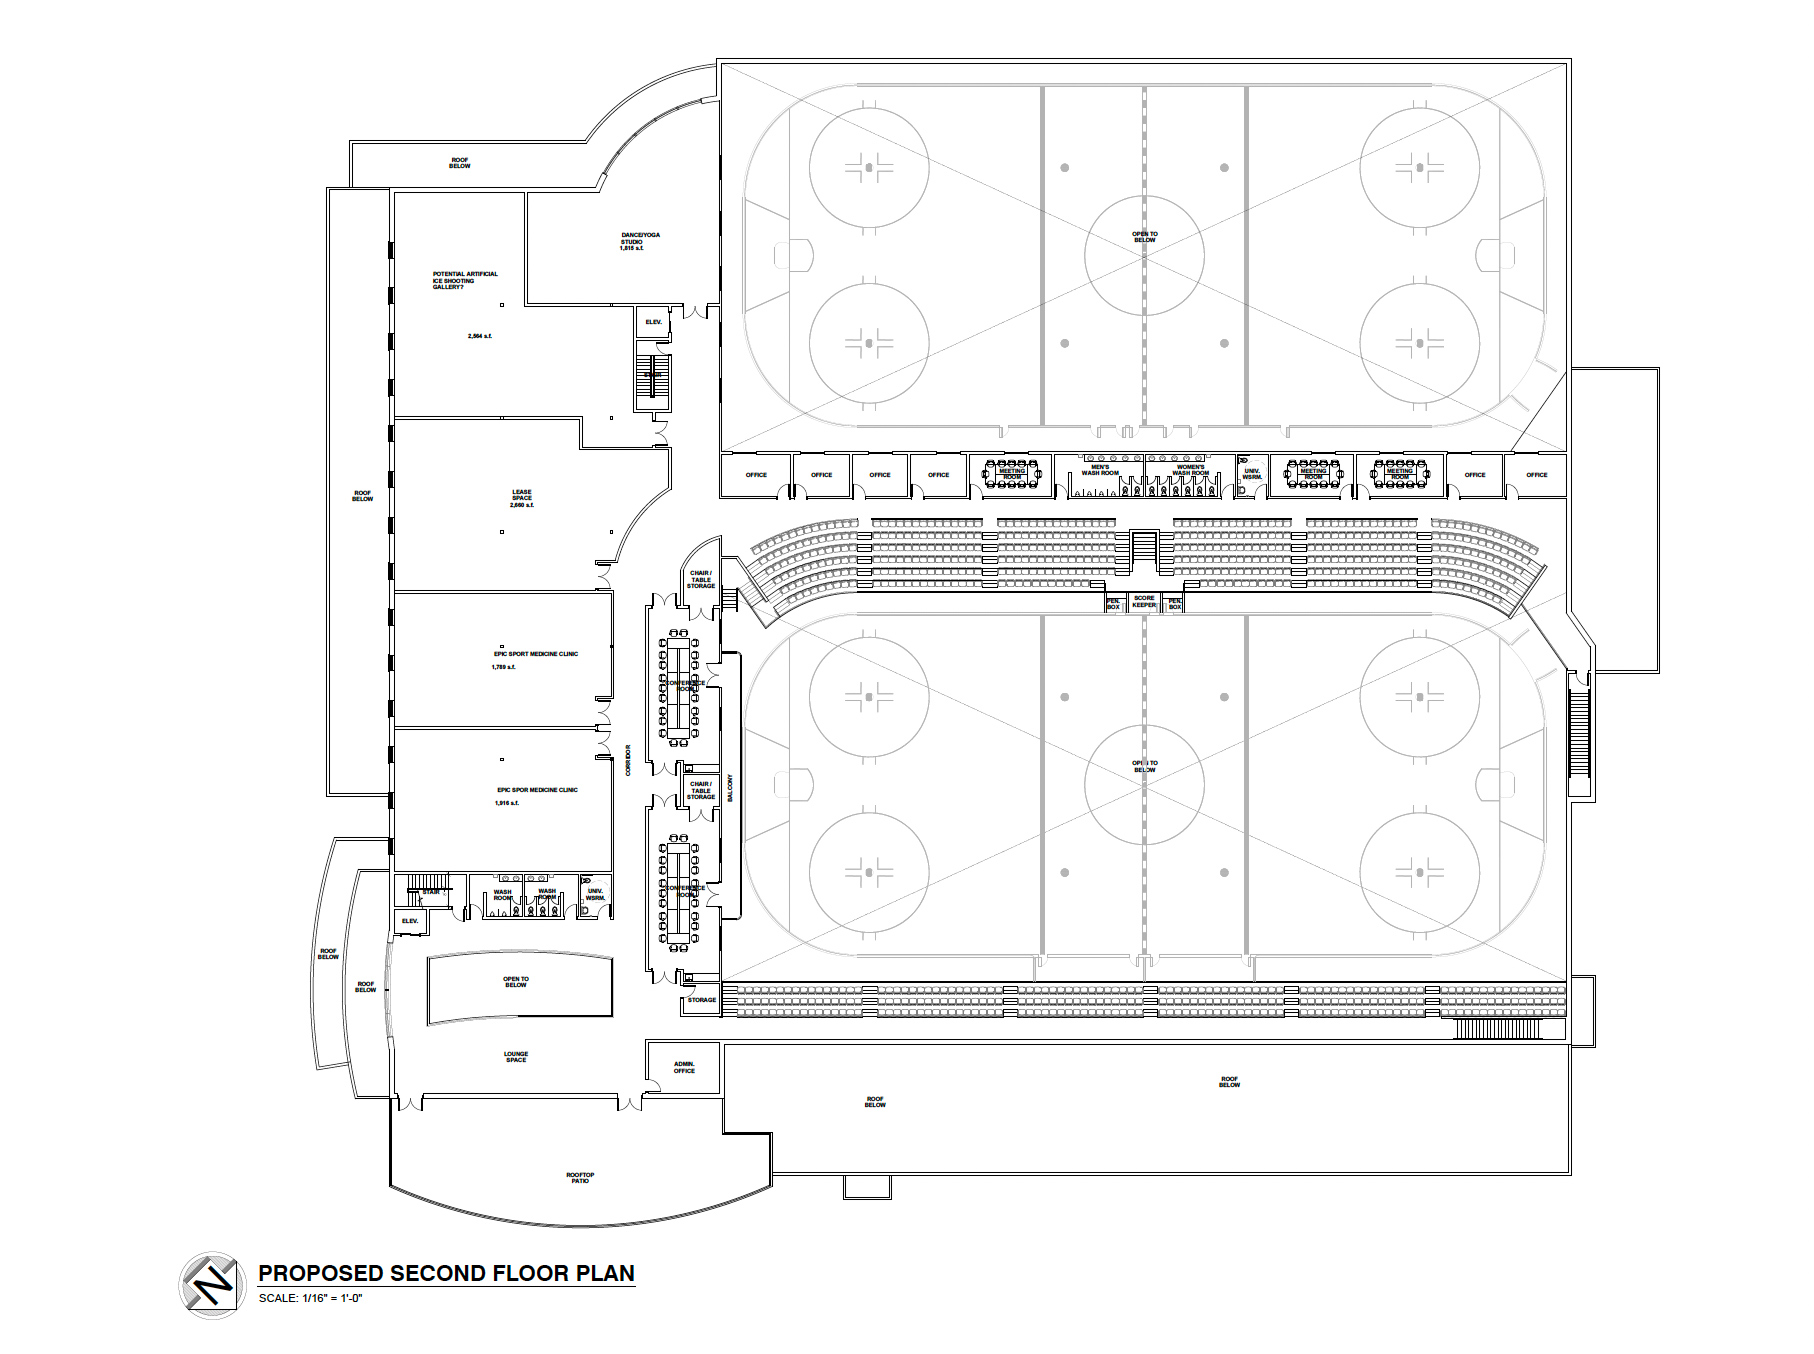 second floor plans for EPIC sports centre